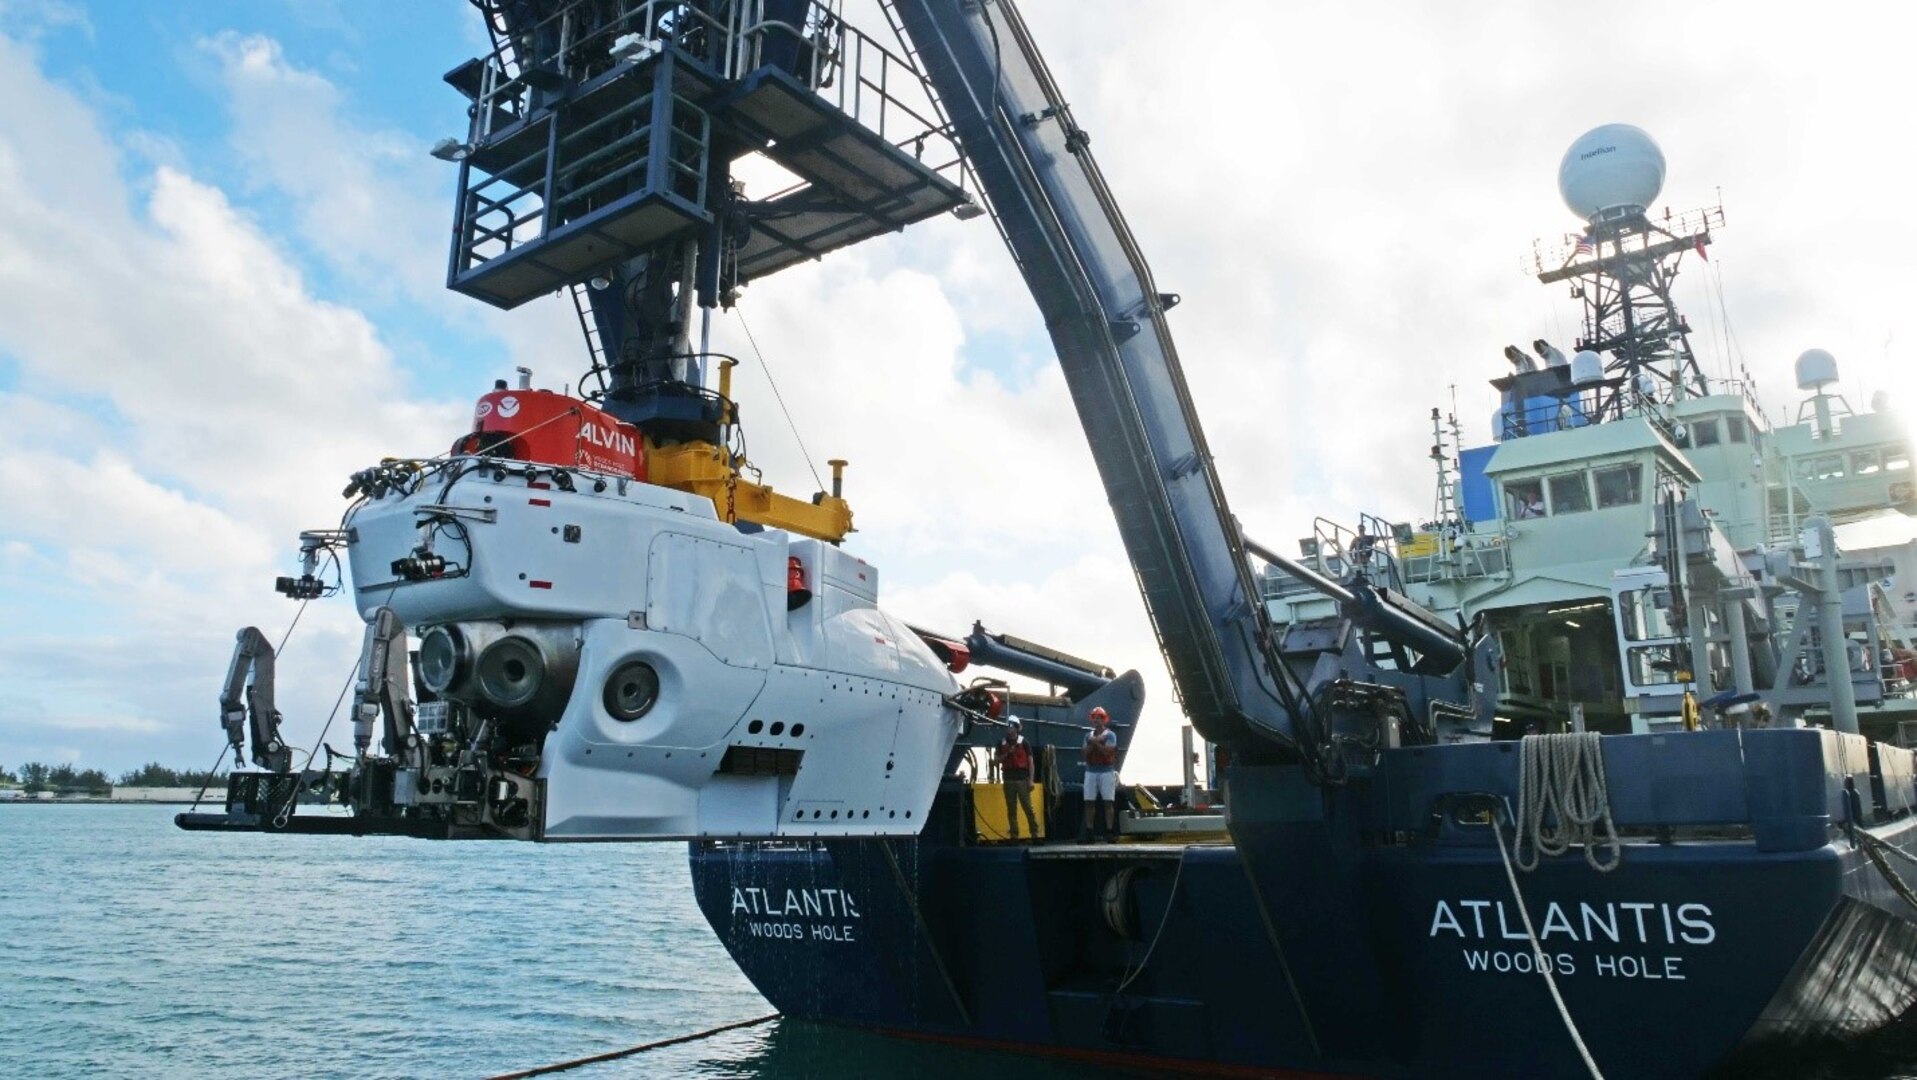 Deep Submergence Vehicle Alvin is craned on the RV Atlantis.